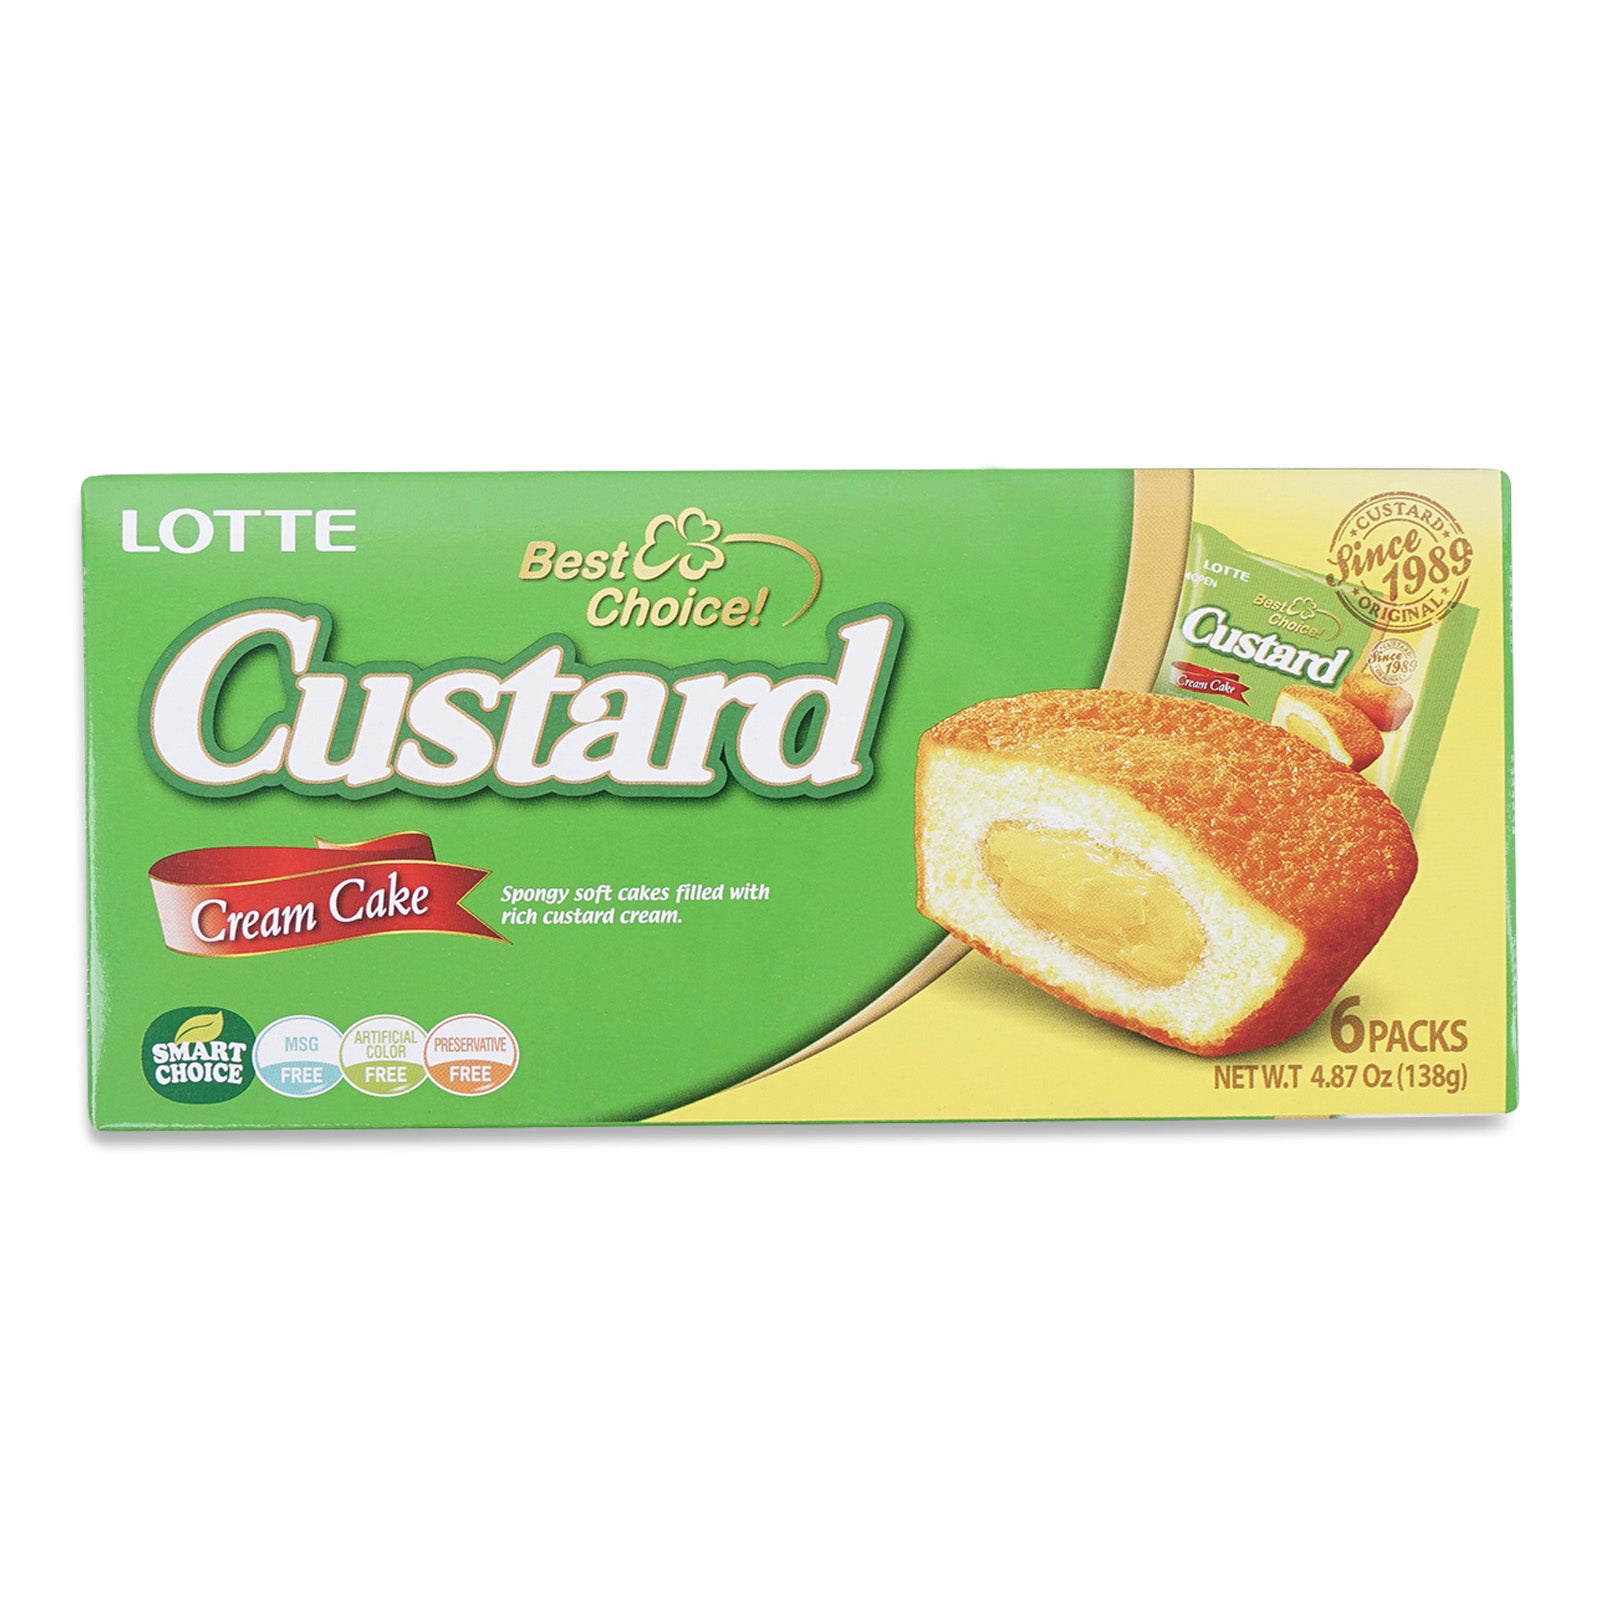 Lotte Custard Cream Cake (6 packs) - 138g/4.87oz